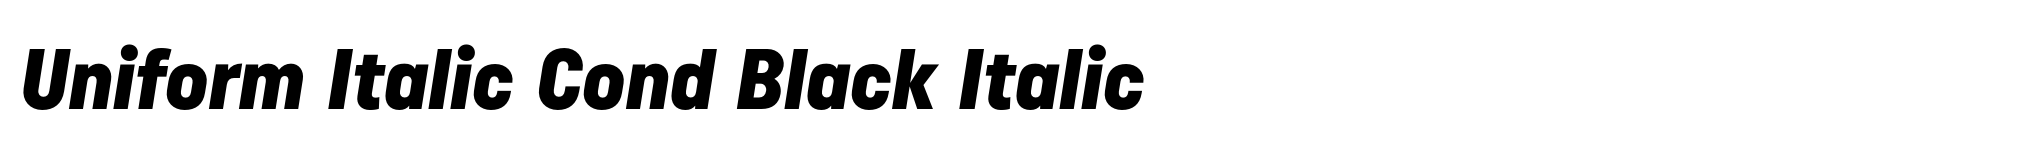 Uniform Italic Cond Black Italic image